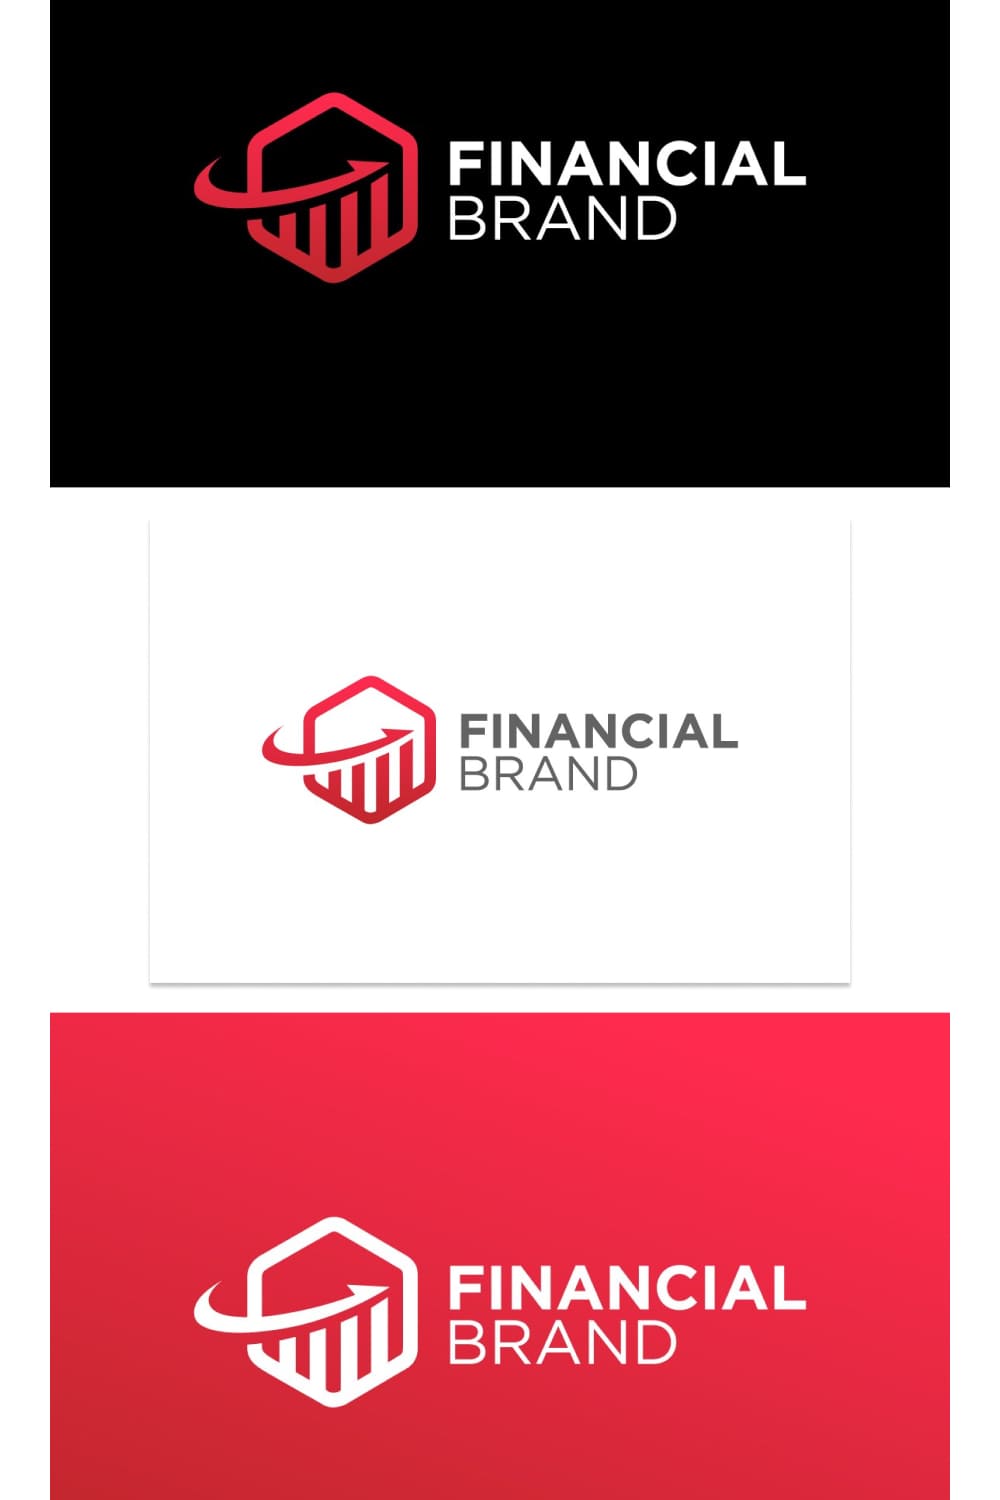 Minimalistic finance logos.